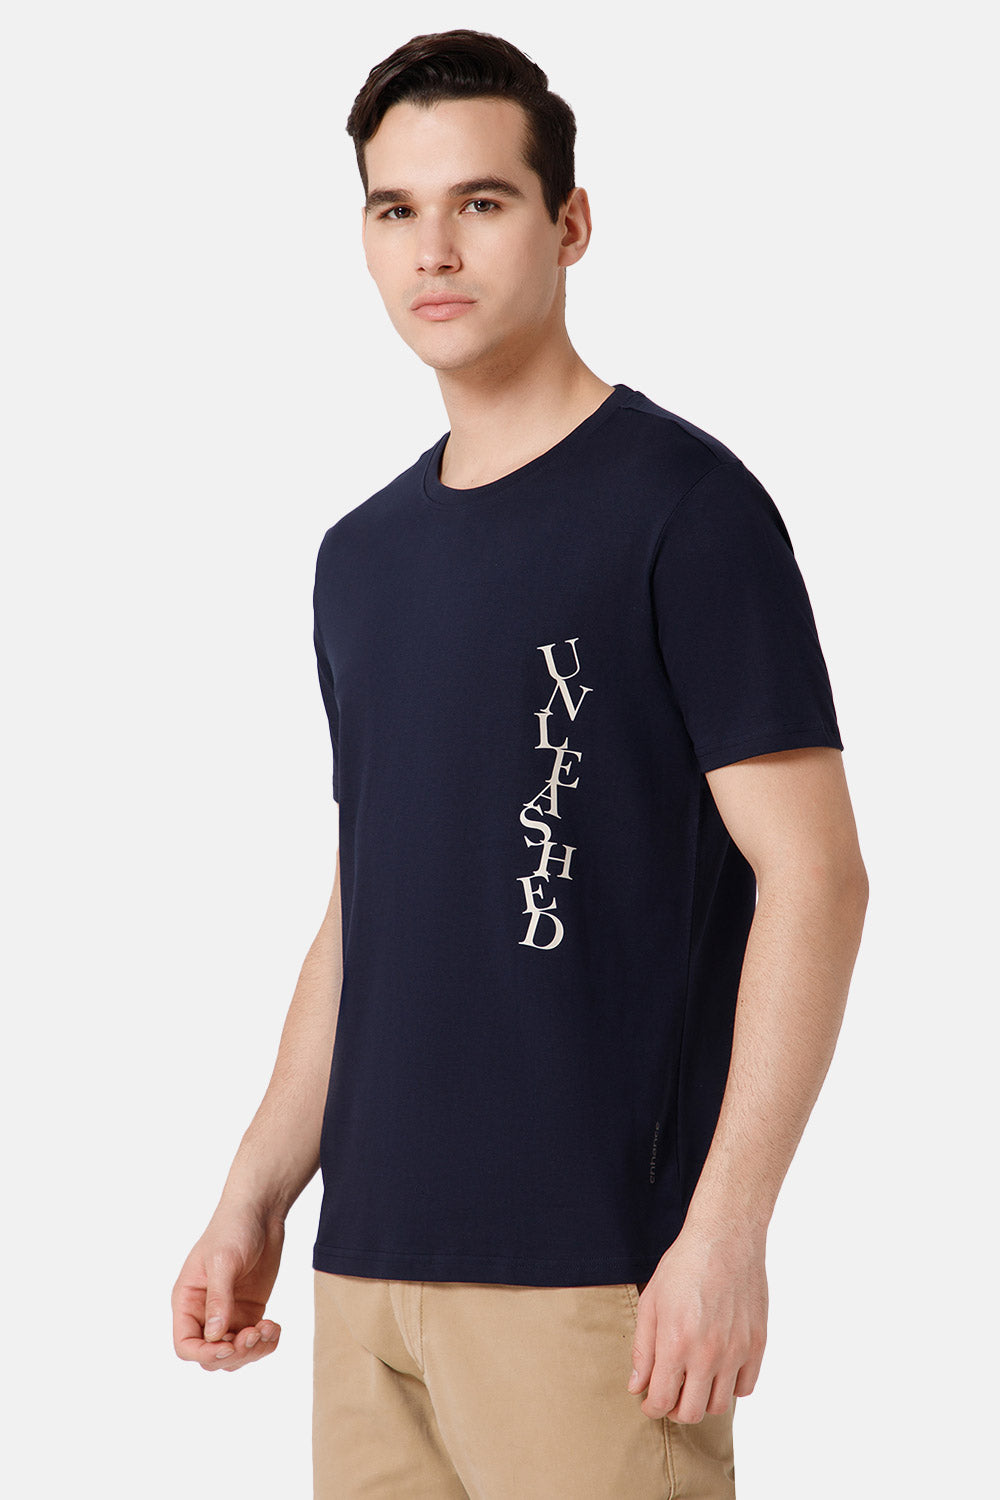 Enhance Printed Crew Neck Men's Casual T-Shirts - Navy - TS17